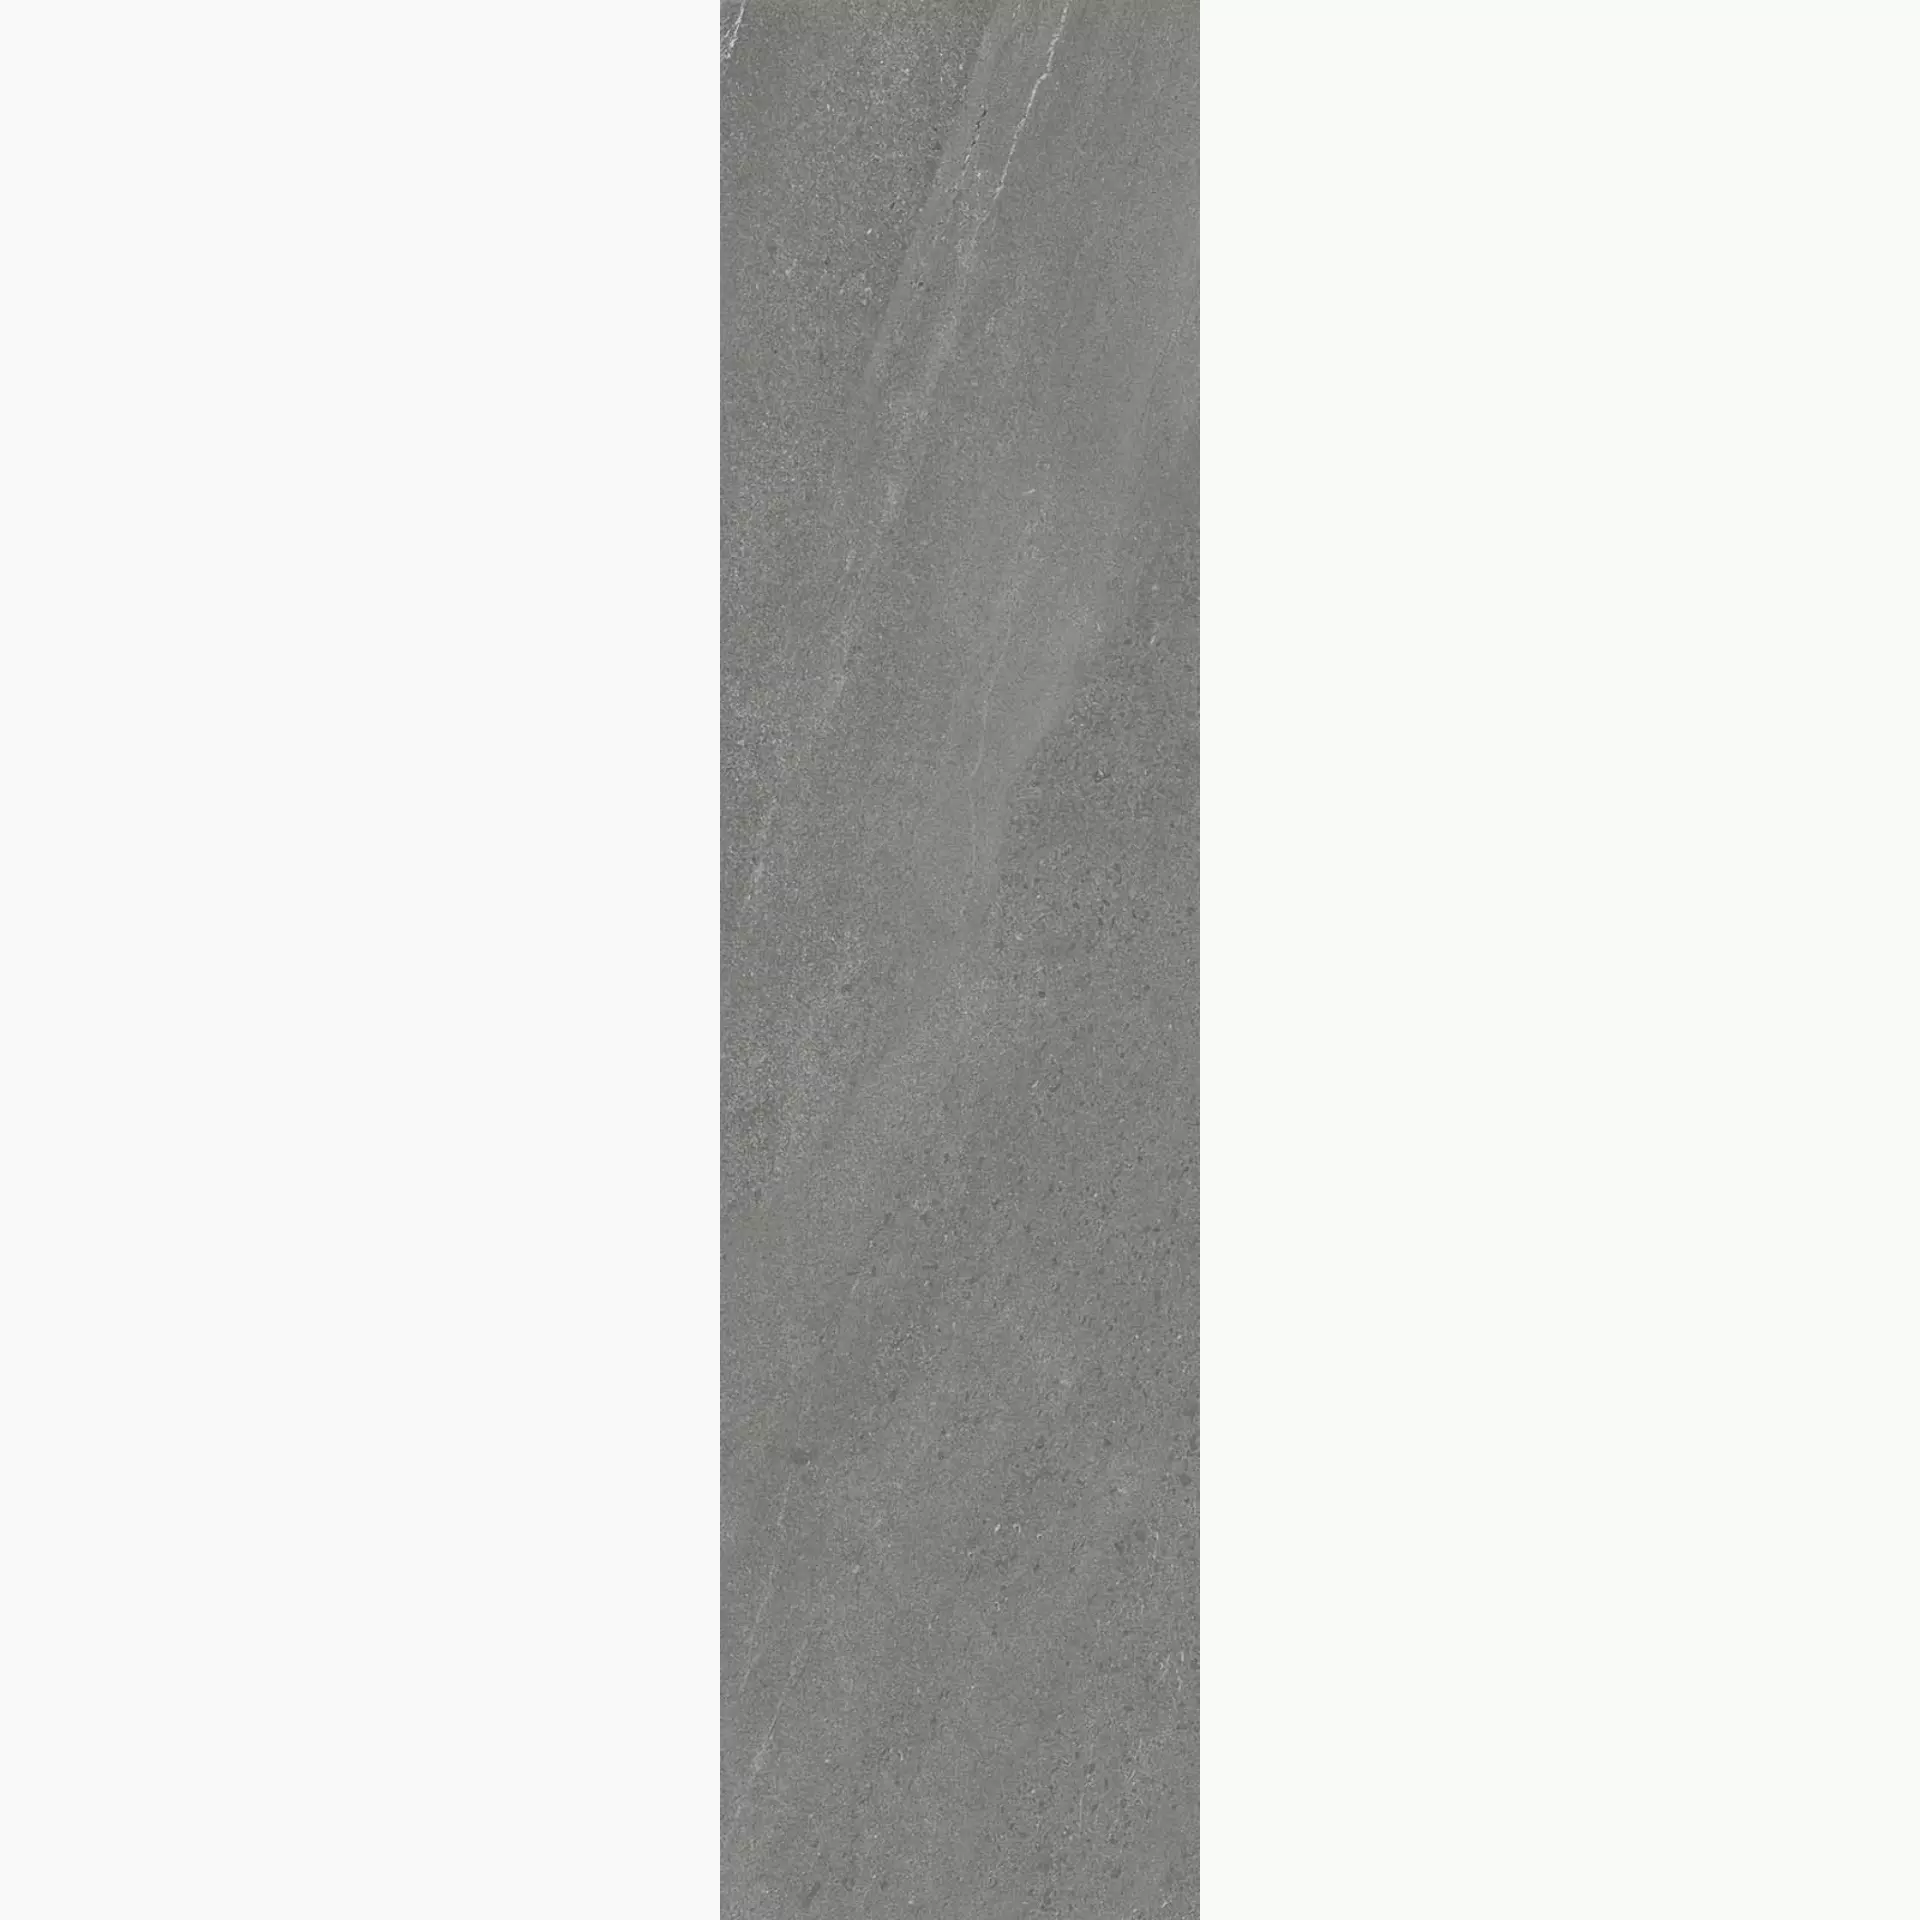 Keope Chorus Grey Naturale – Matt 434F3034 30x120cm rectified 9mm